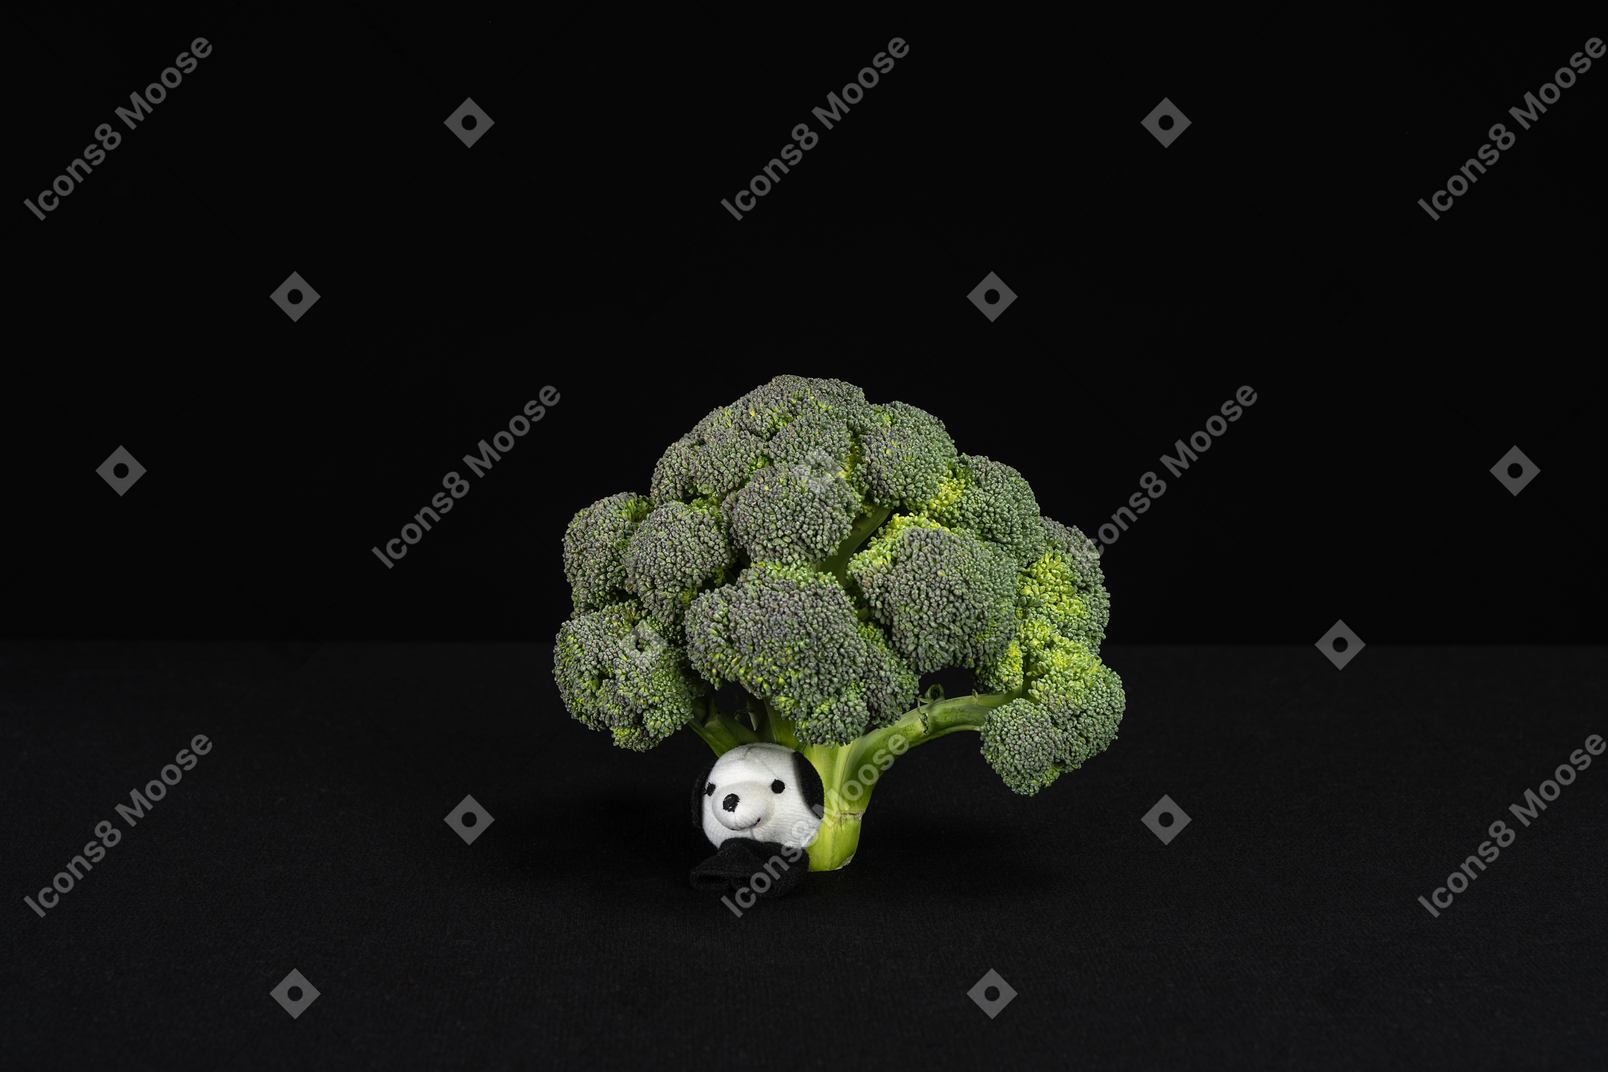 White animal toy under broccoli tree in black background